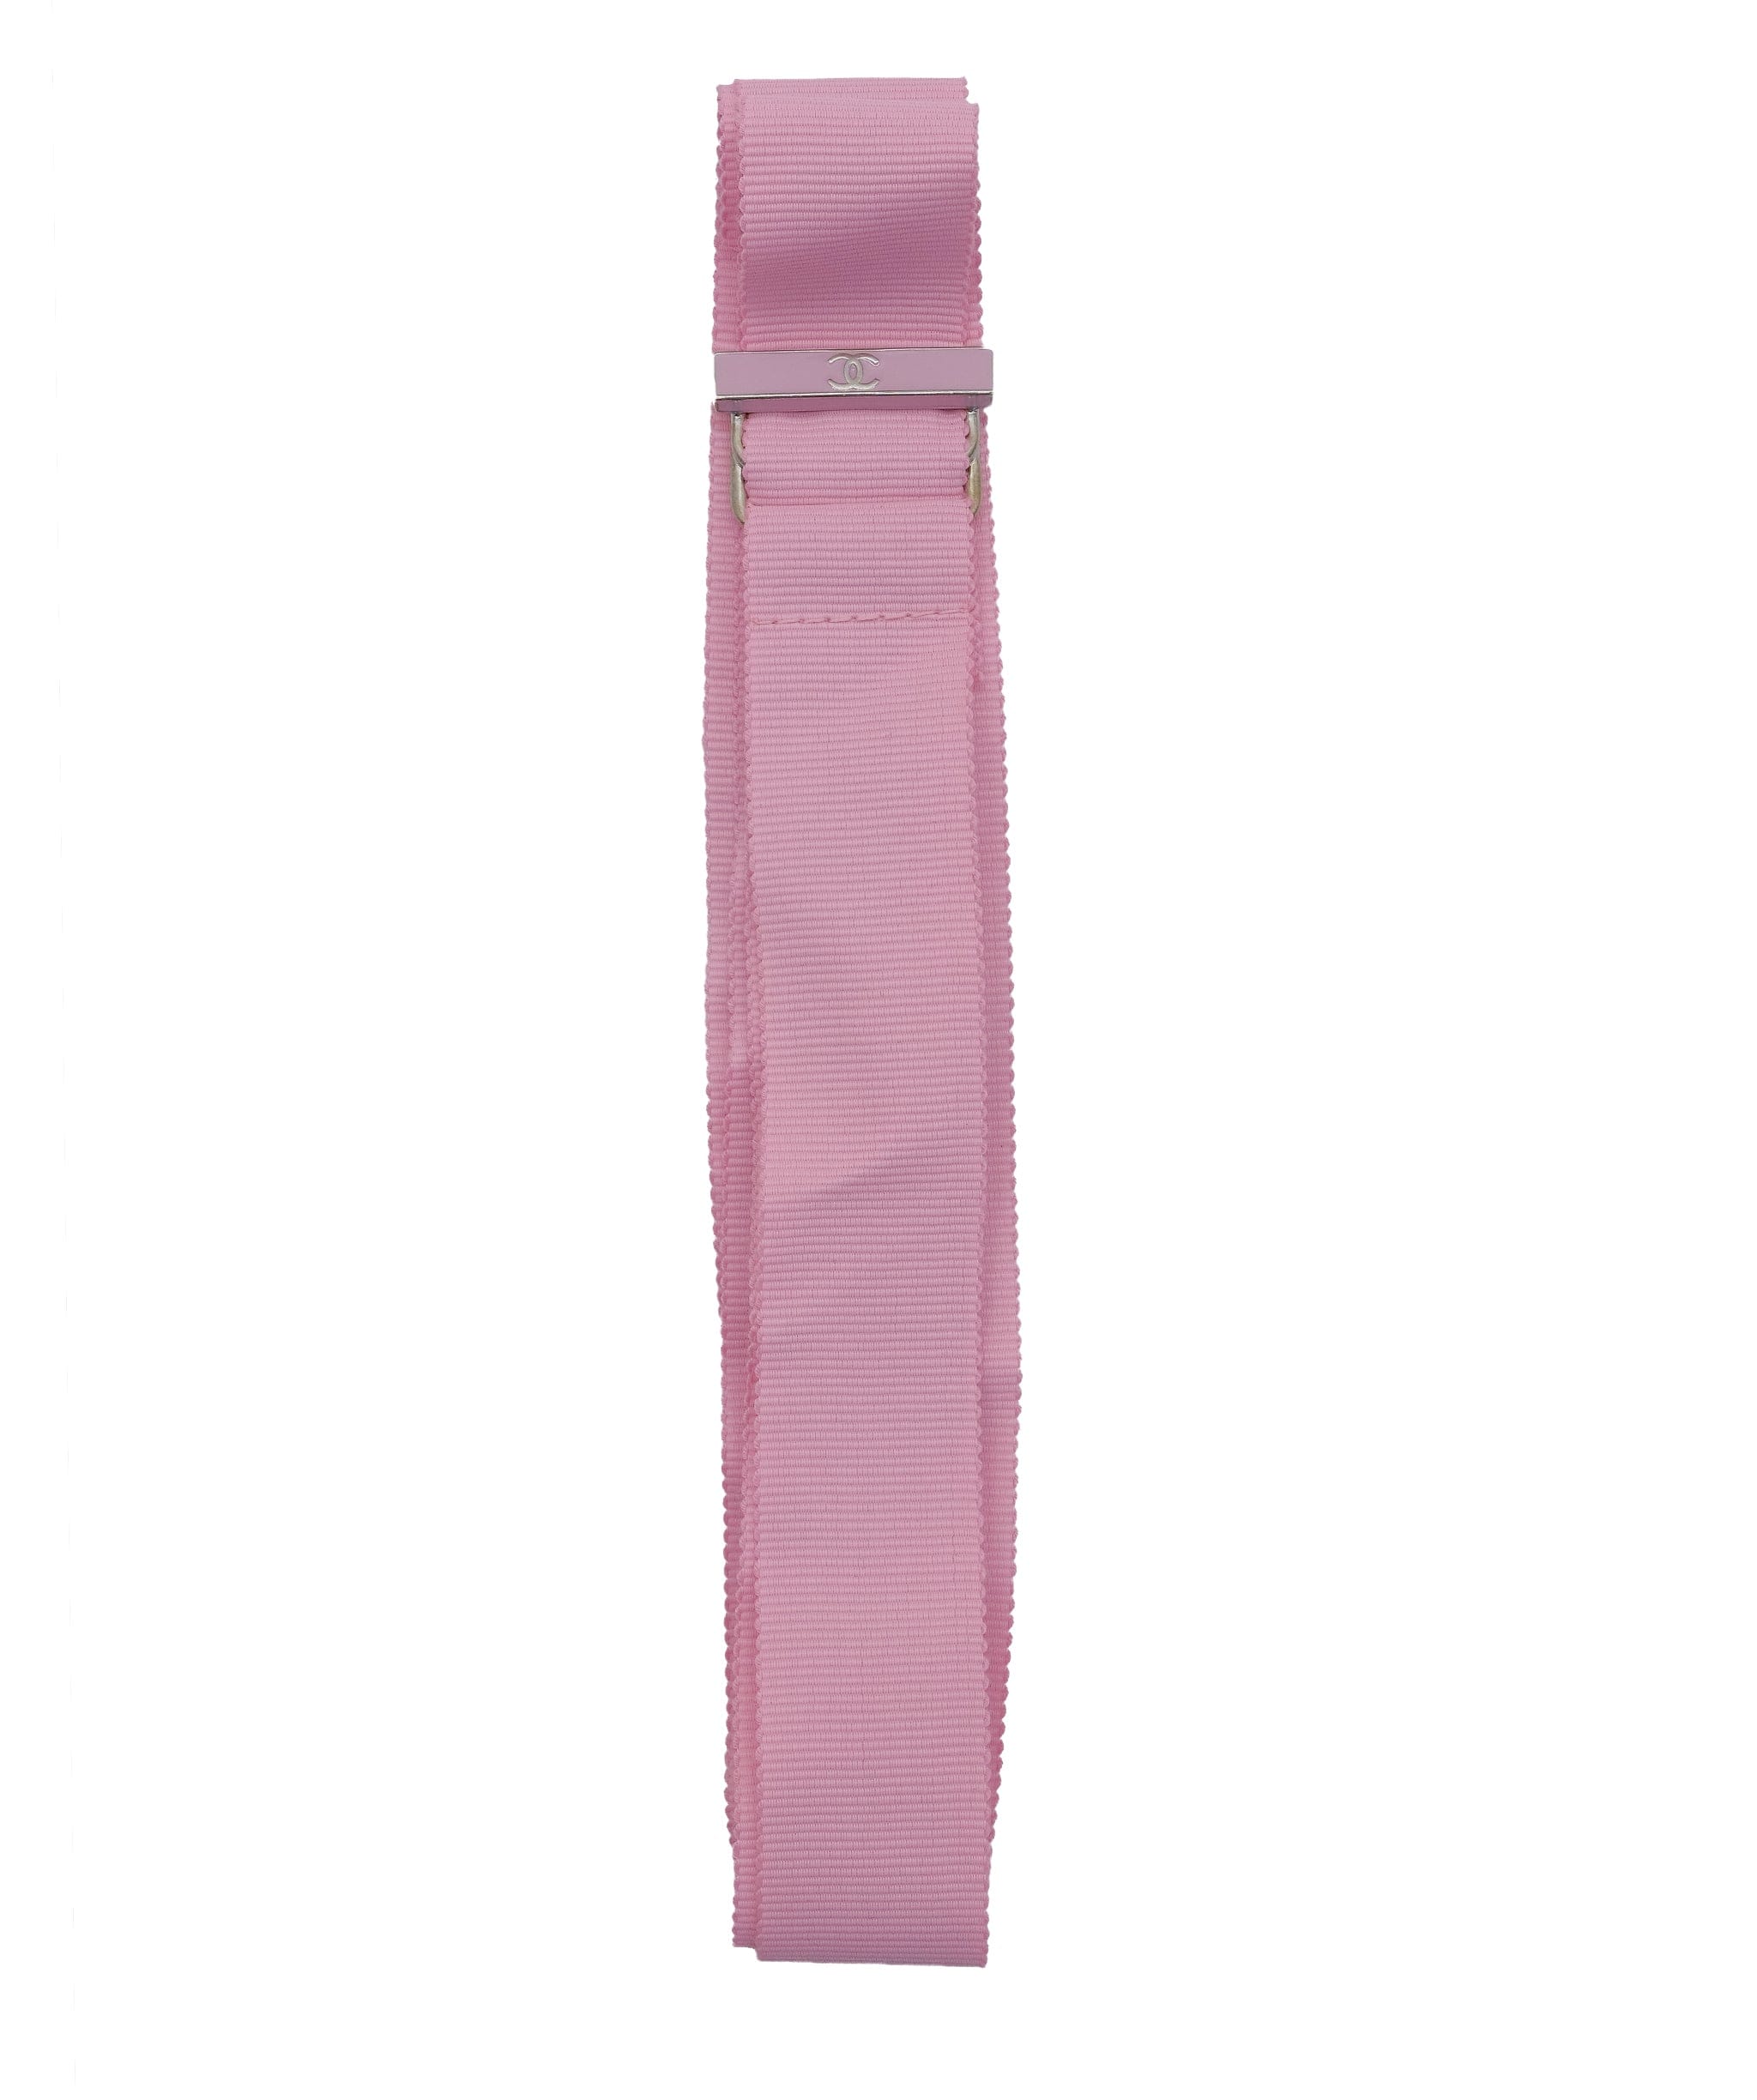 Chanel Chanel Pink belt RJC2623